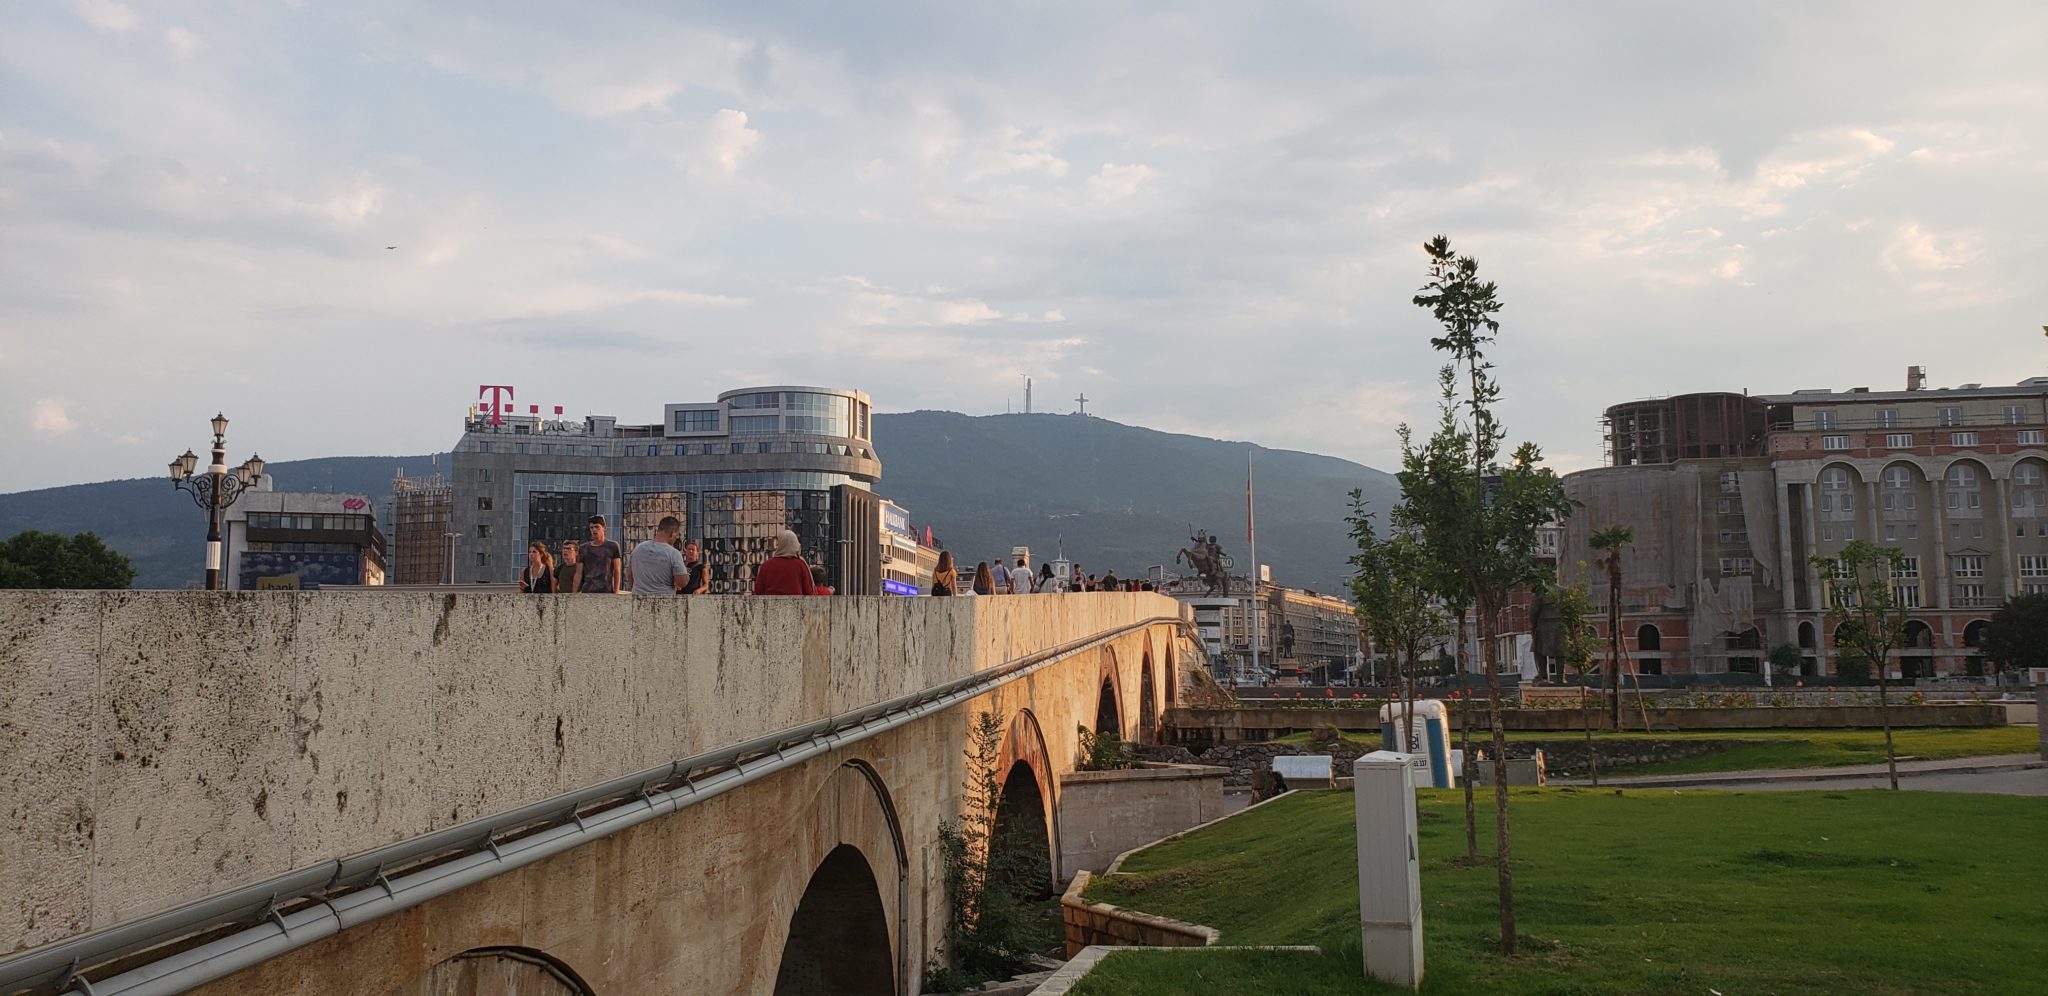 a stone bridge with people walking on it